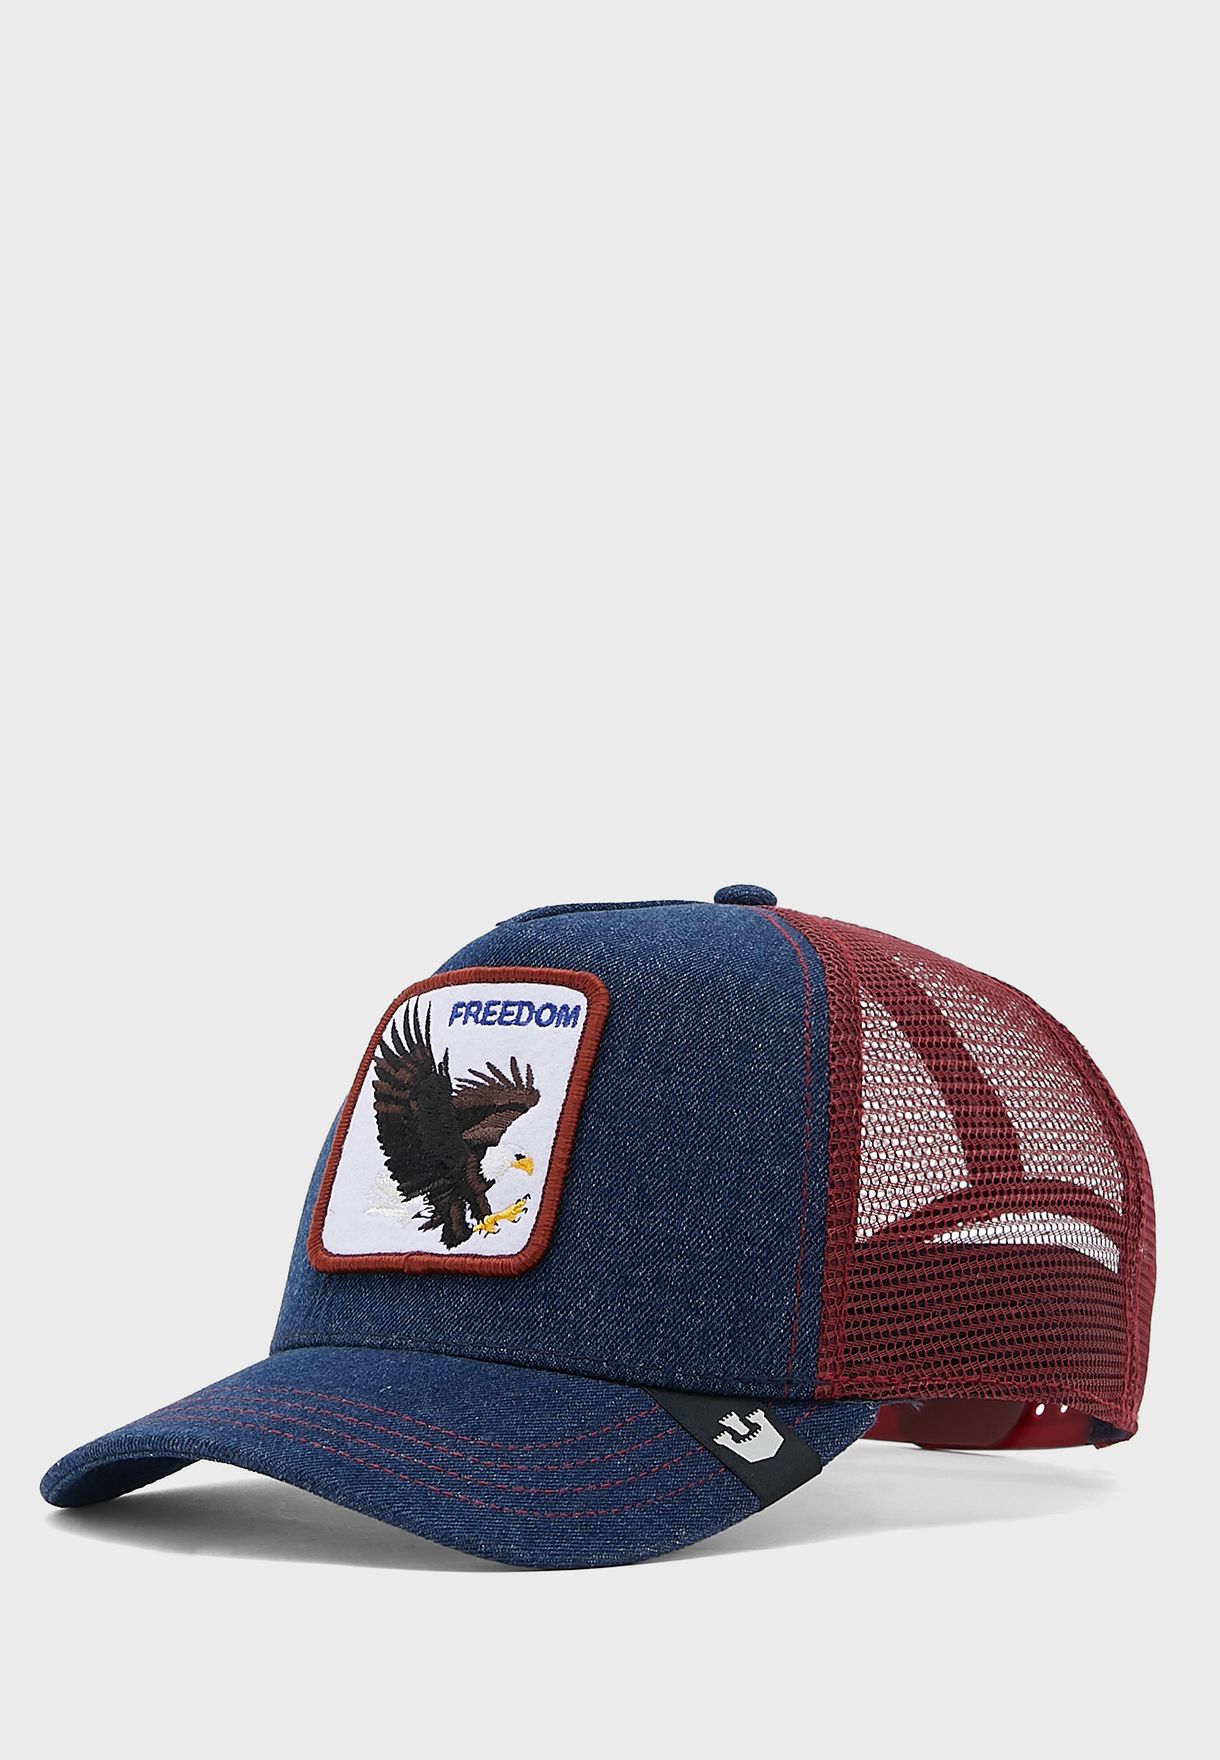 The Freedom Eagle Trucker Cap